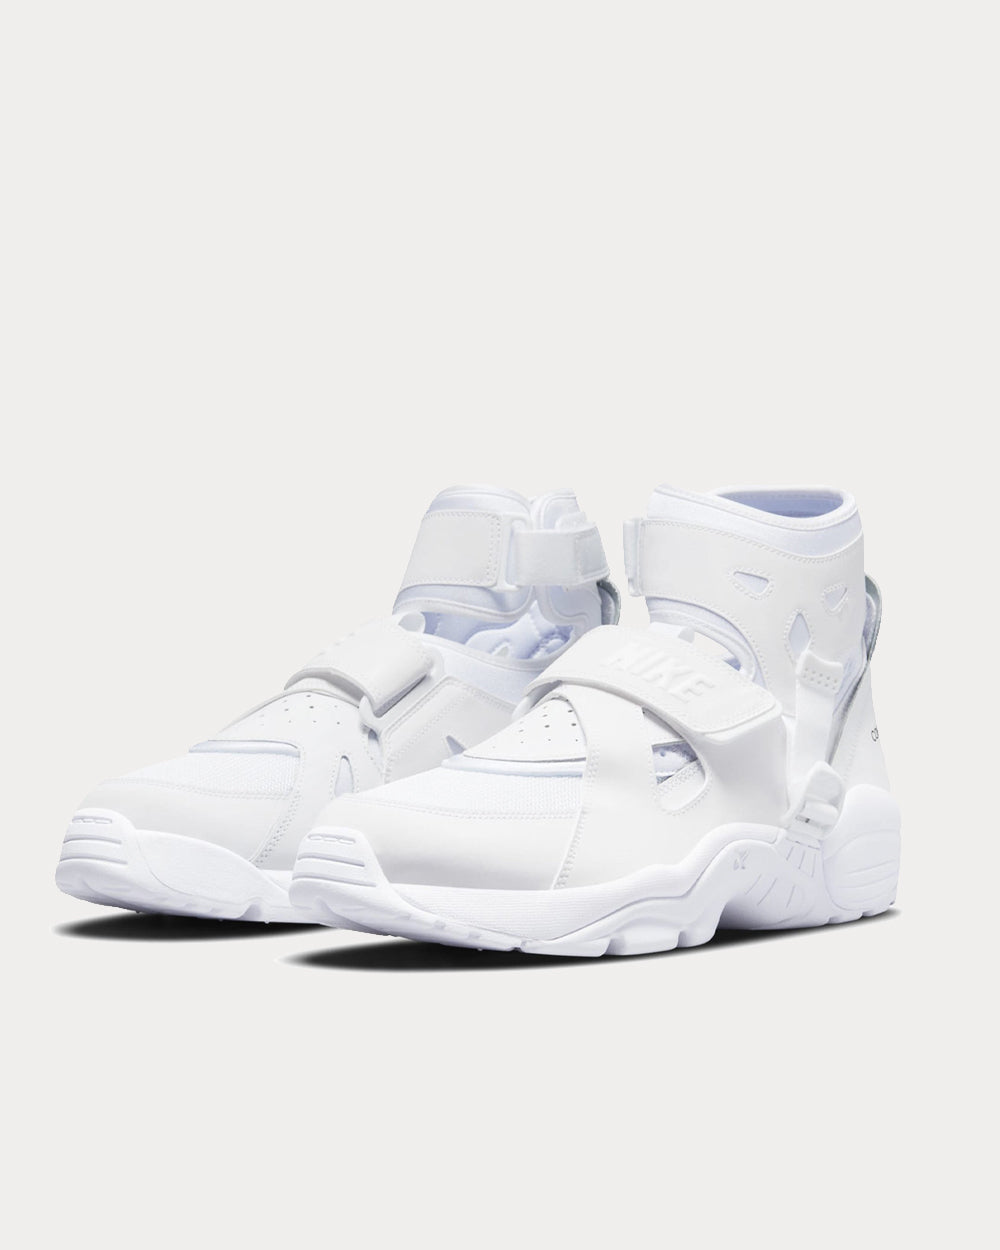 Nike x Comme des Garçons - Air Carnivore White High Top Sneakers